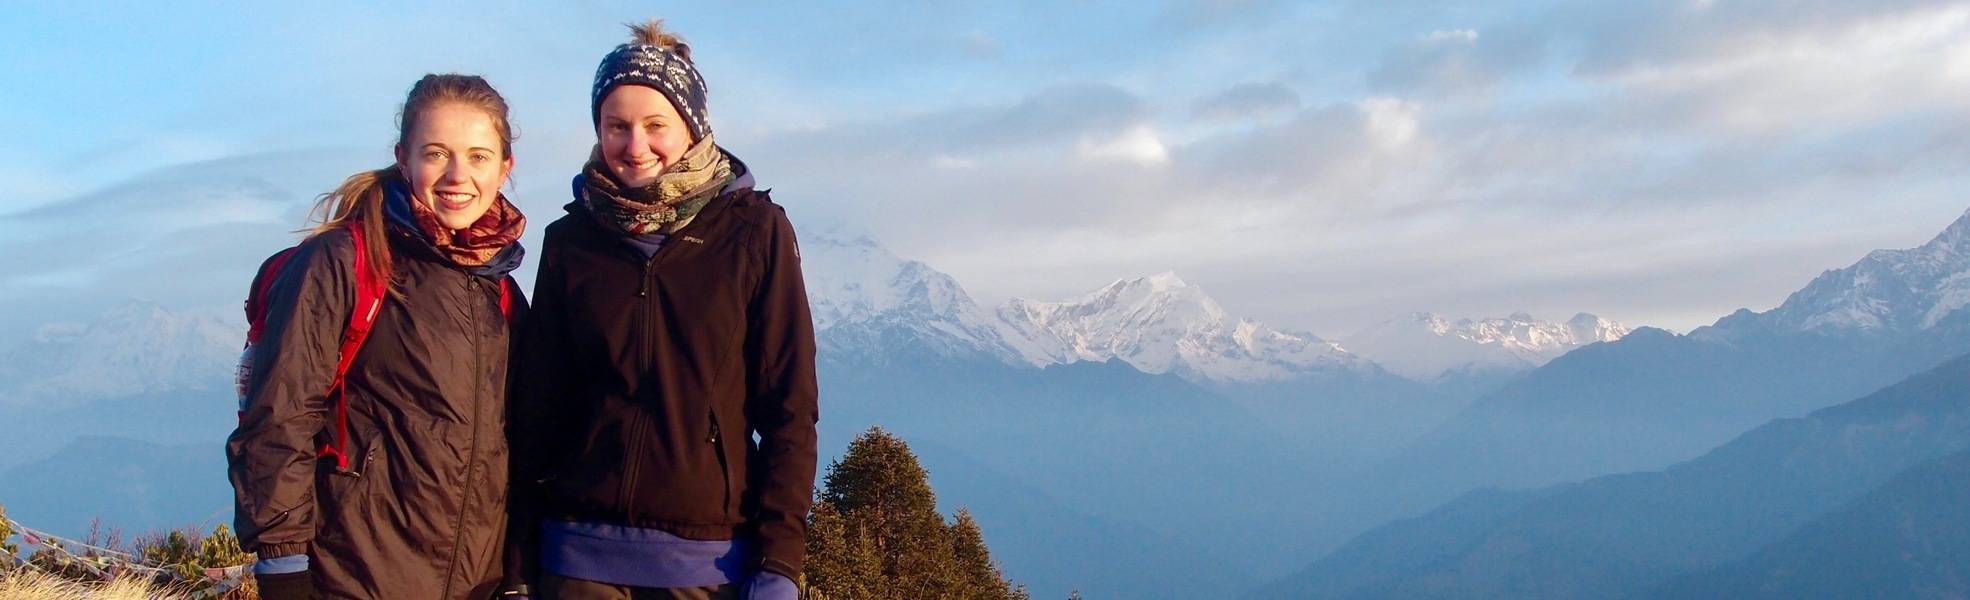 Volunteers entdecken das Gebirge beim Sabbatical in Nepal